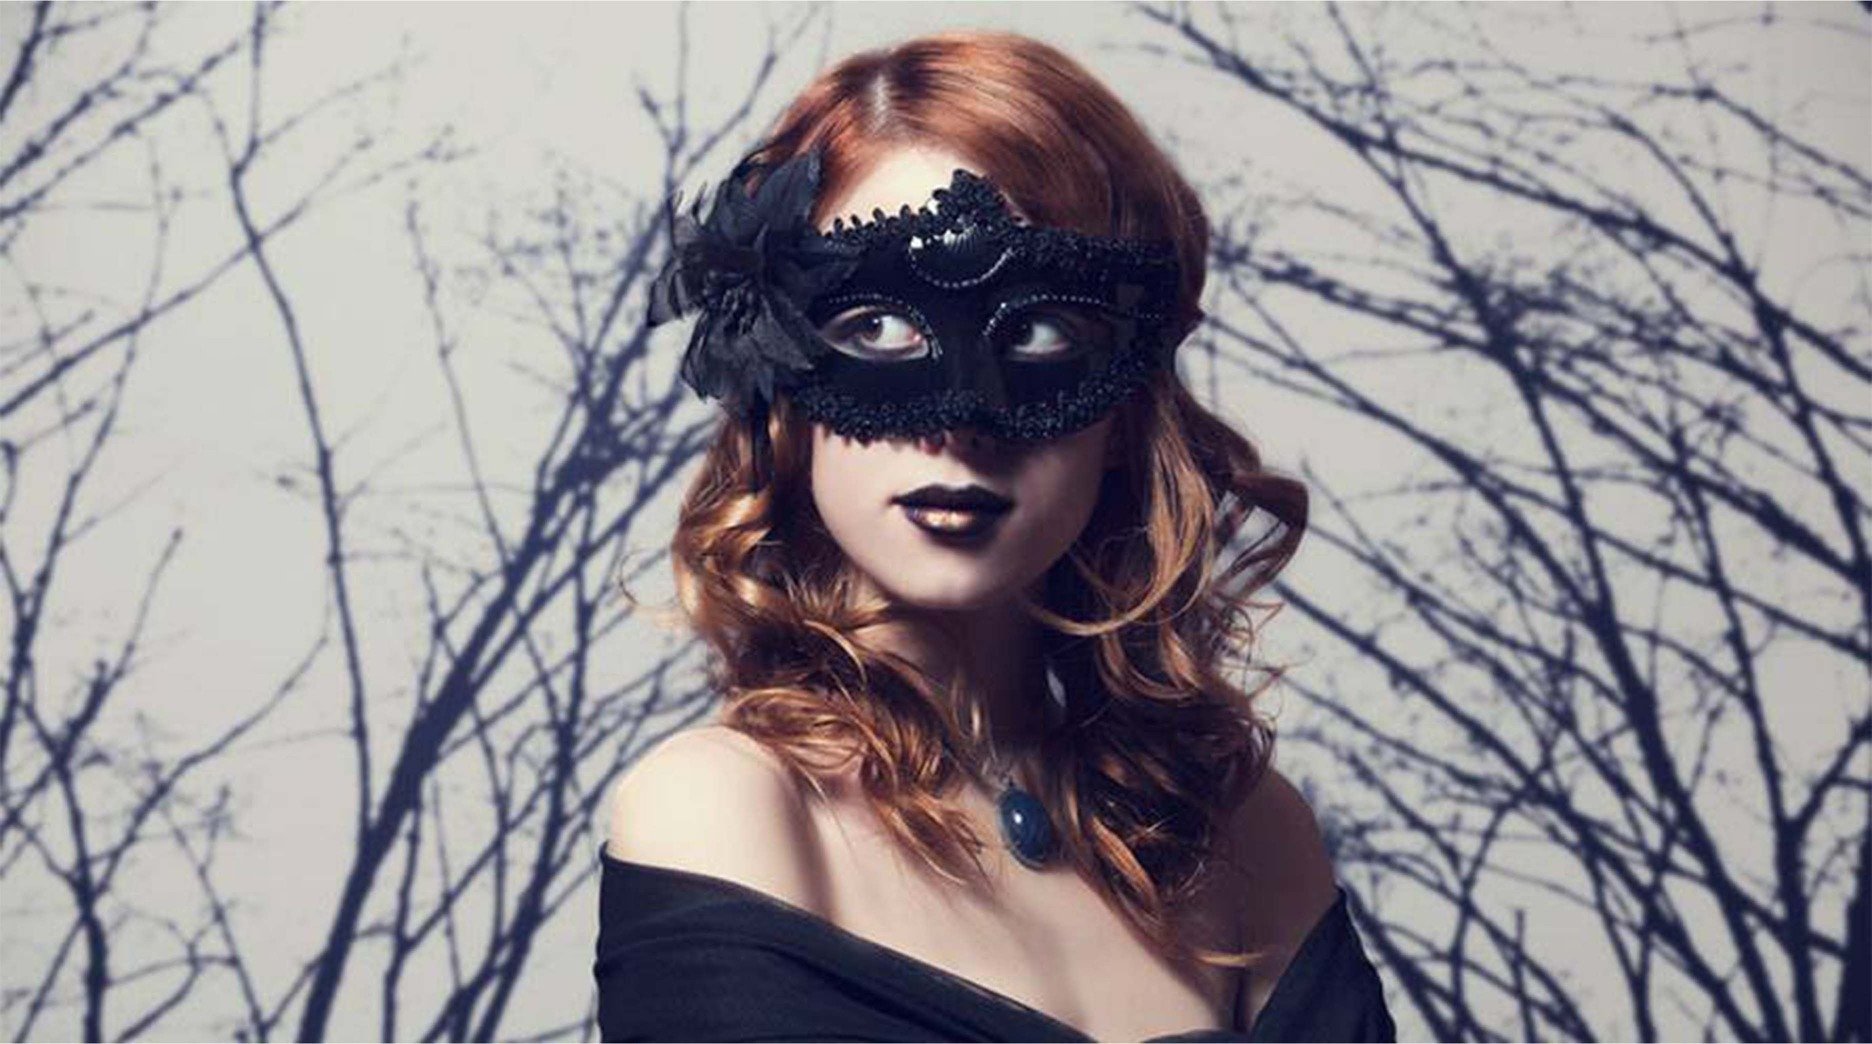 Halloween hairstyle ideas dark hair mask hair tricks mermaid vampire style - Garnier